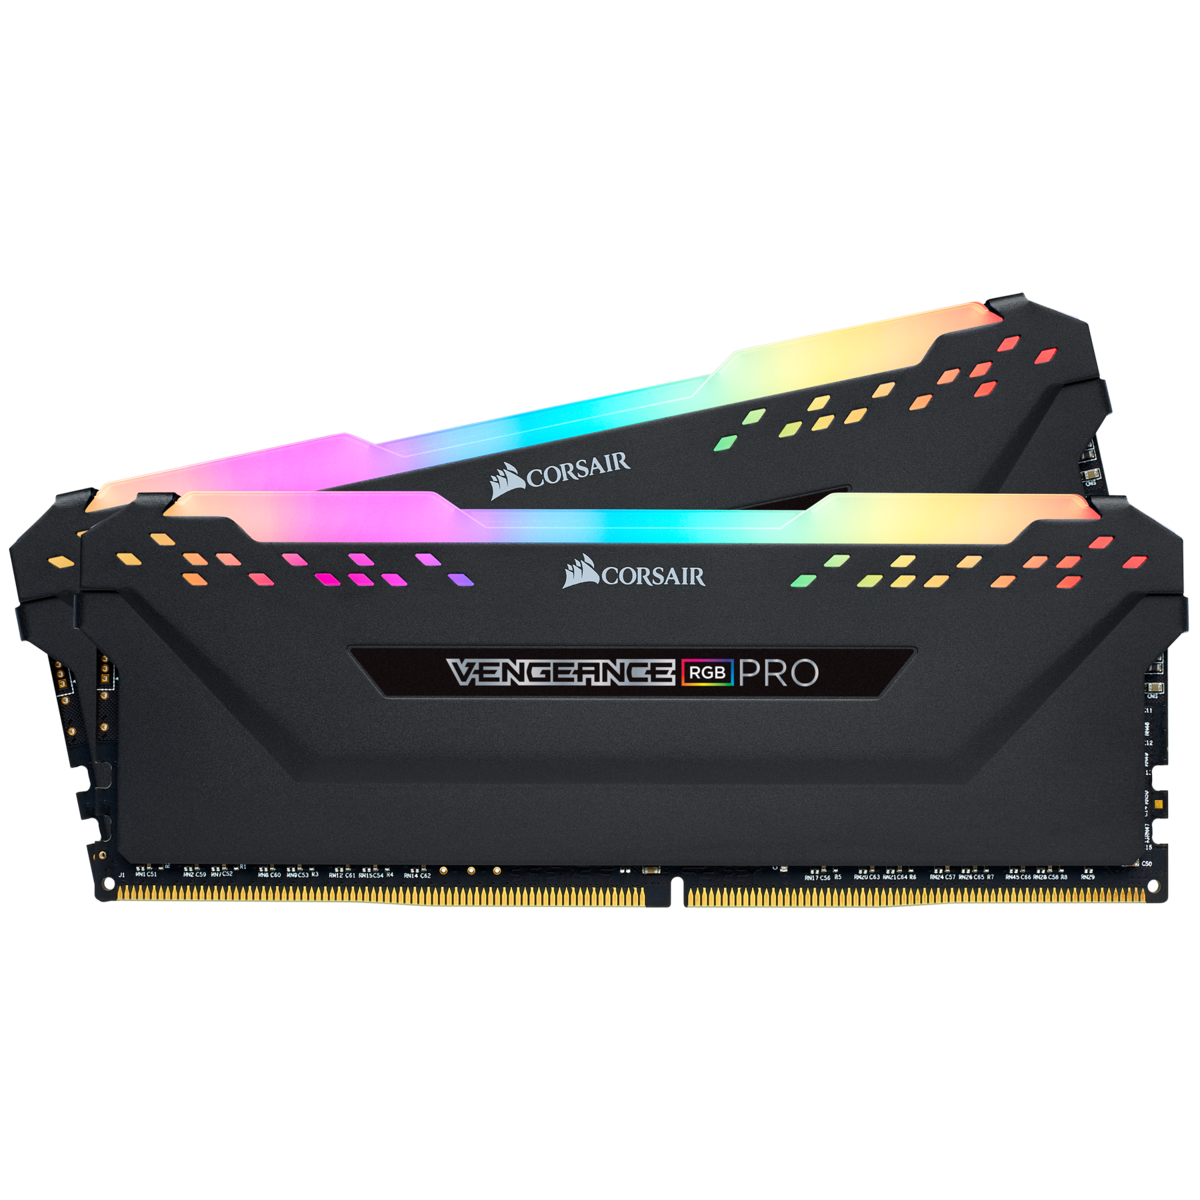 RAM Kit Corsair Vengeance Pro RGB 16Gb (2x8Gb) DDR4-3000- CMW16GX4M2D3000C16